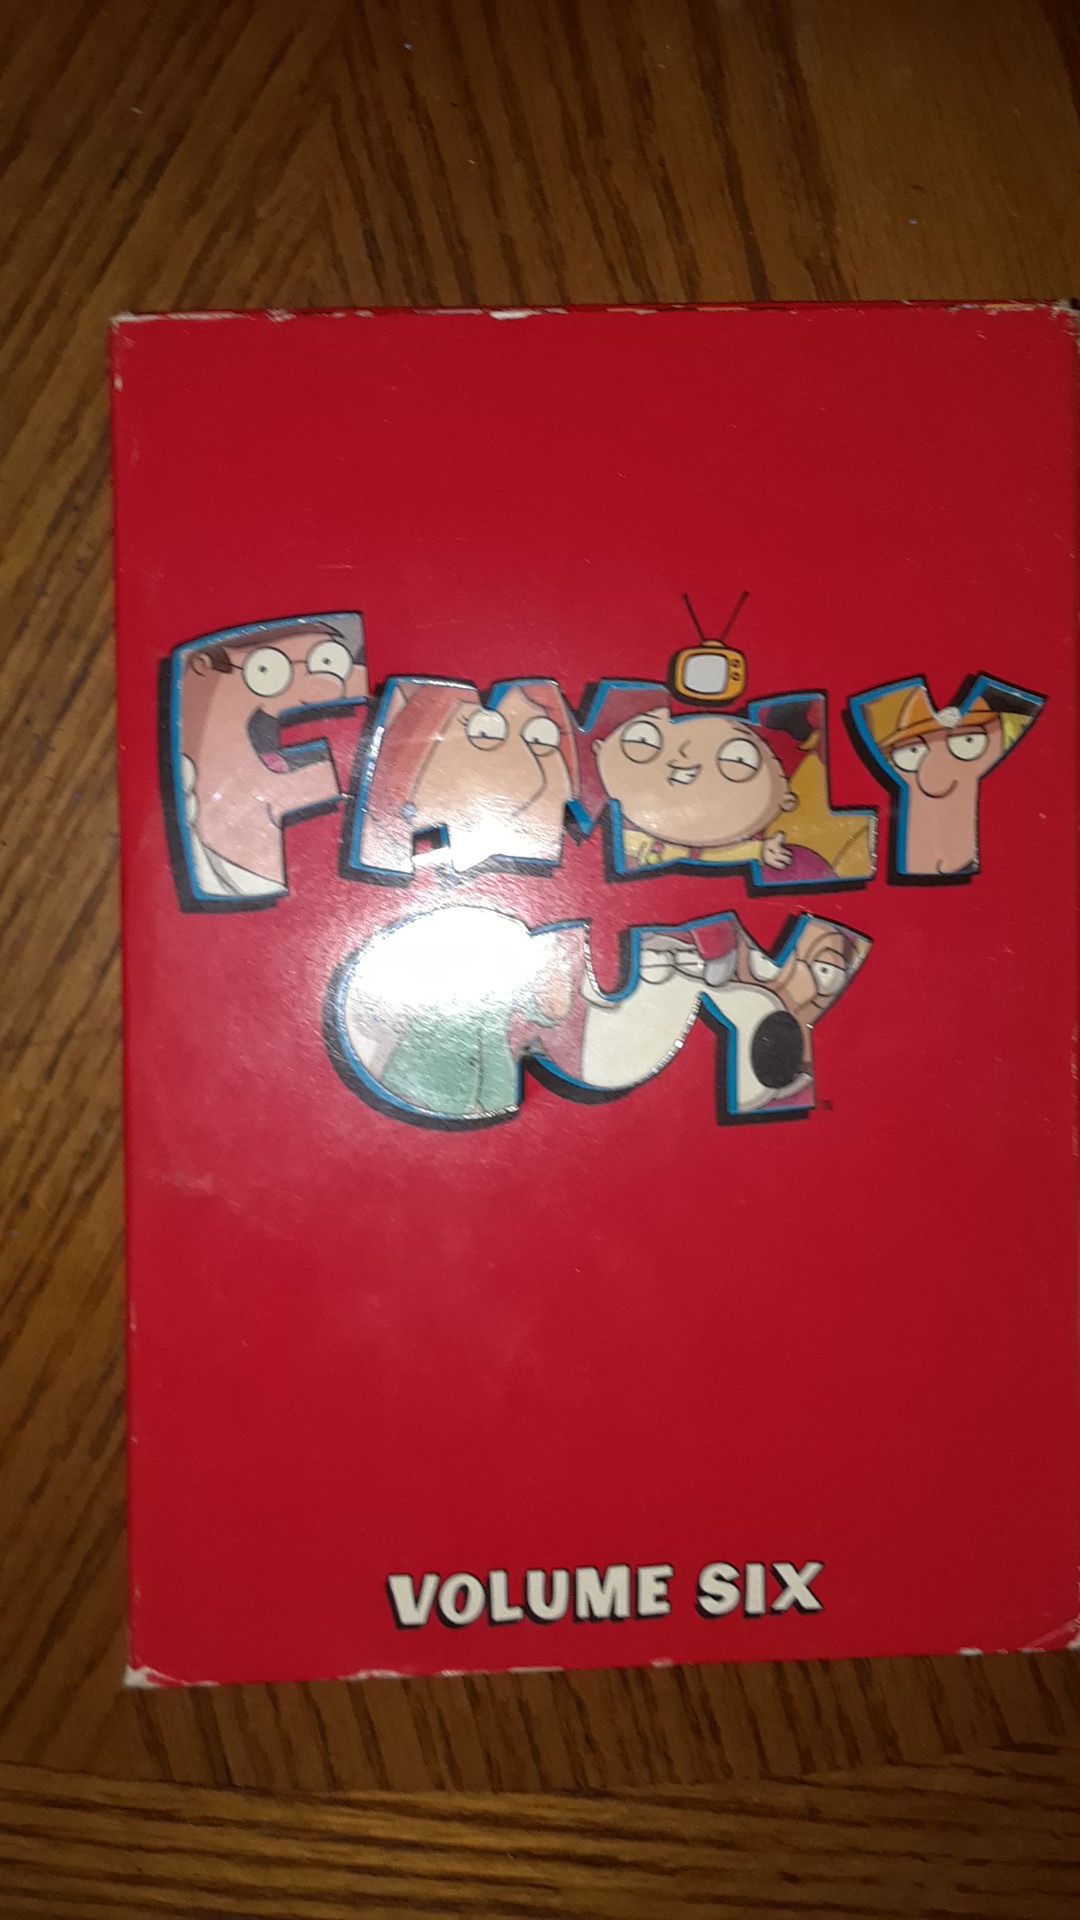 FAMILY GUY volume six